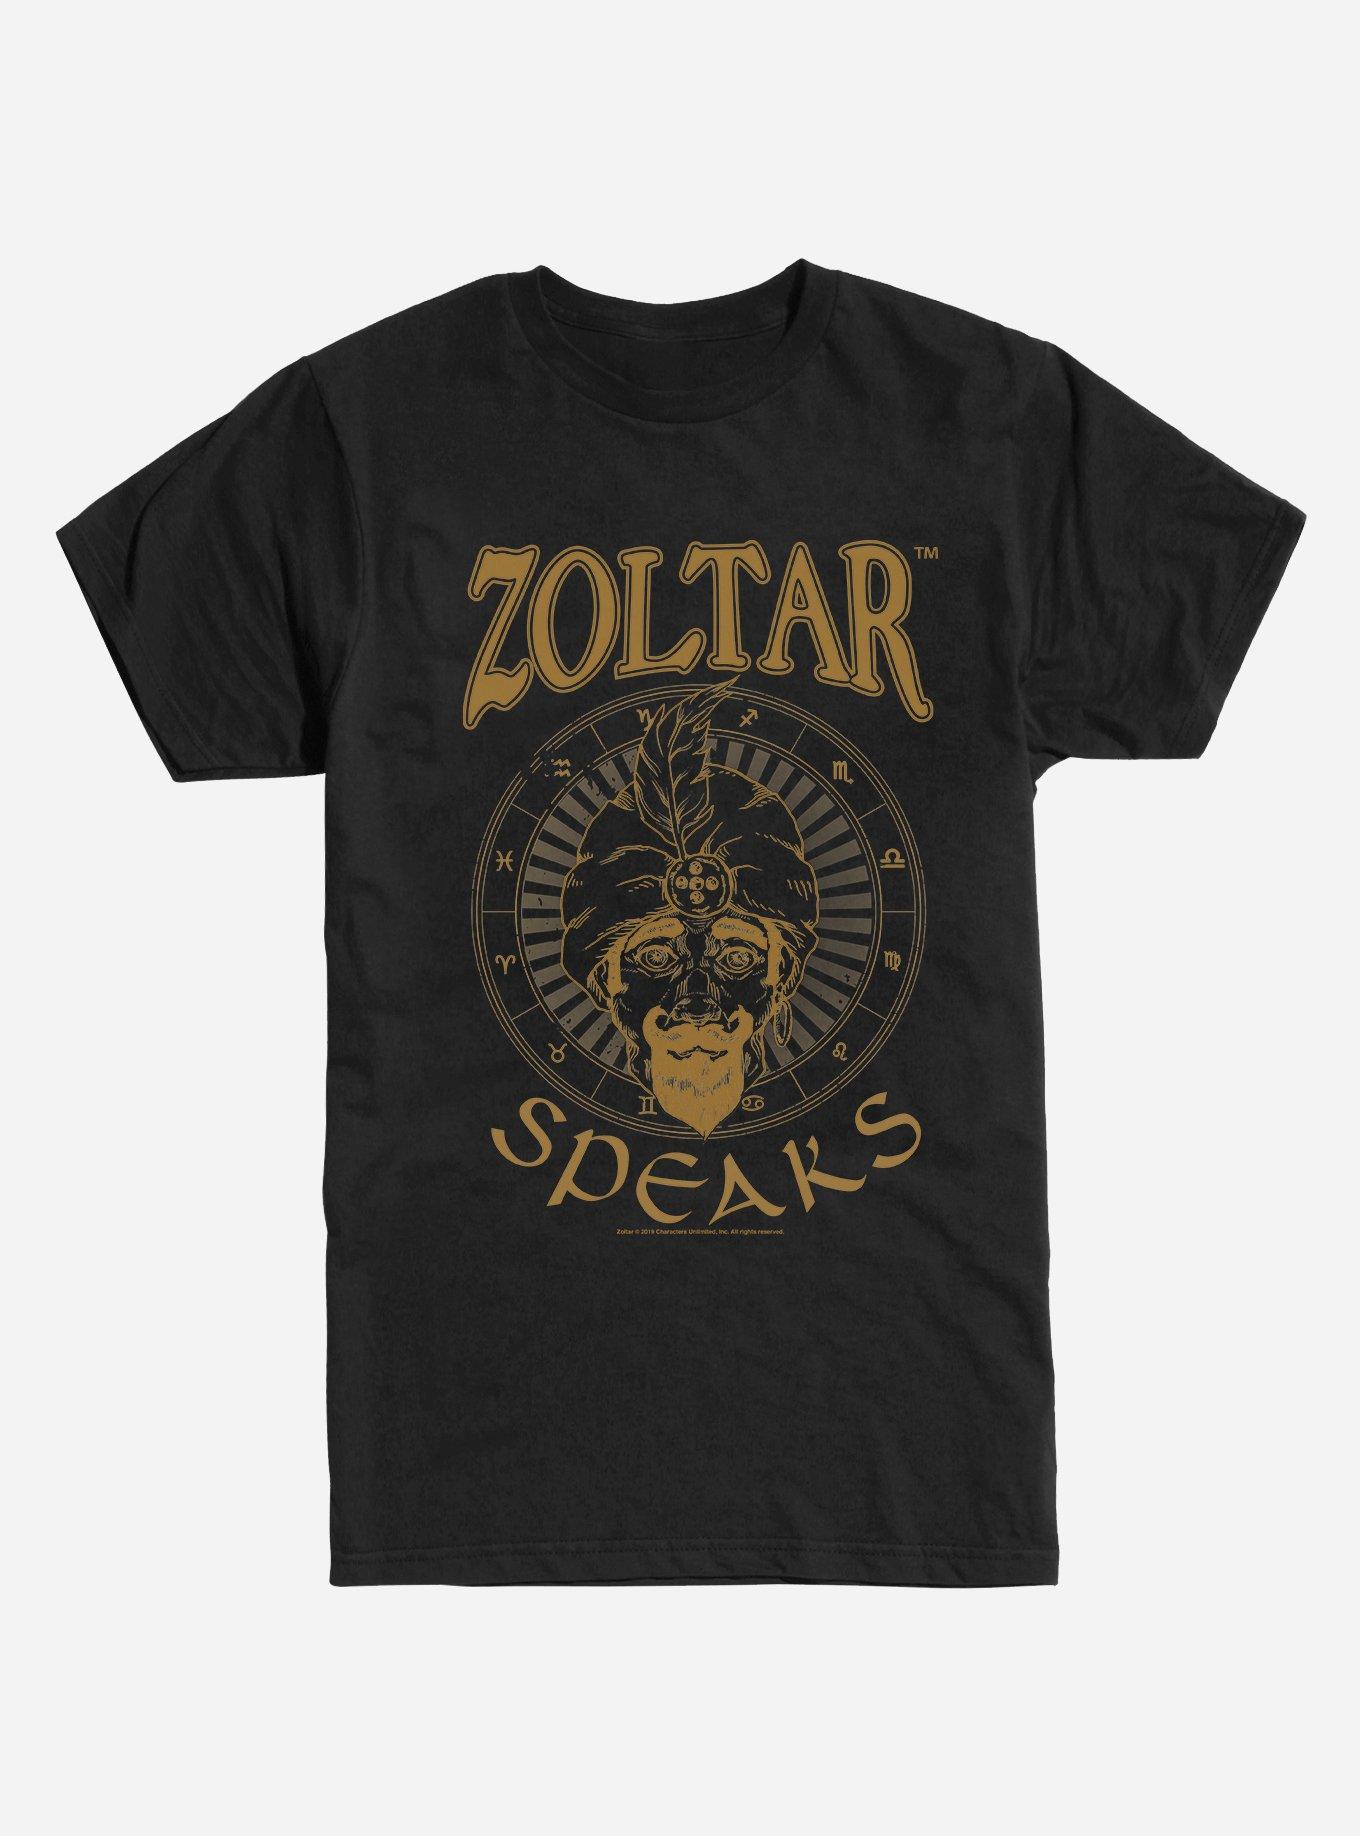 Big Zoltar Speaks Zodiac T-Shirt | Hot Topic